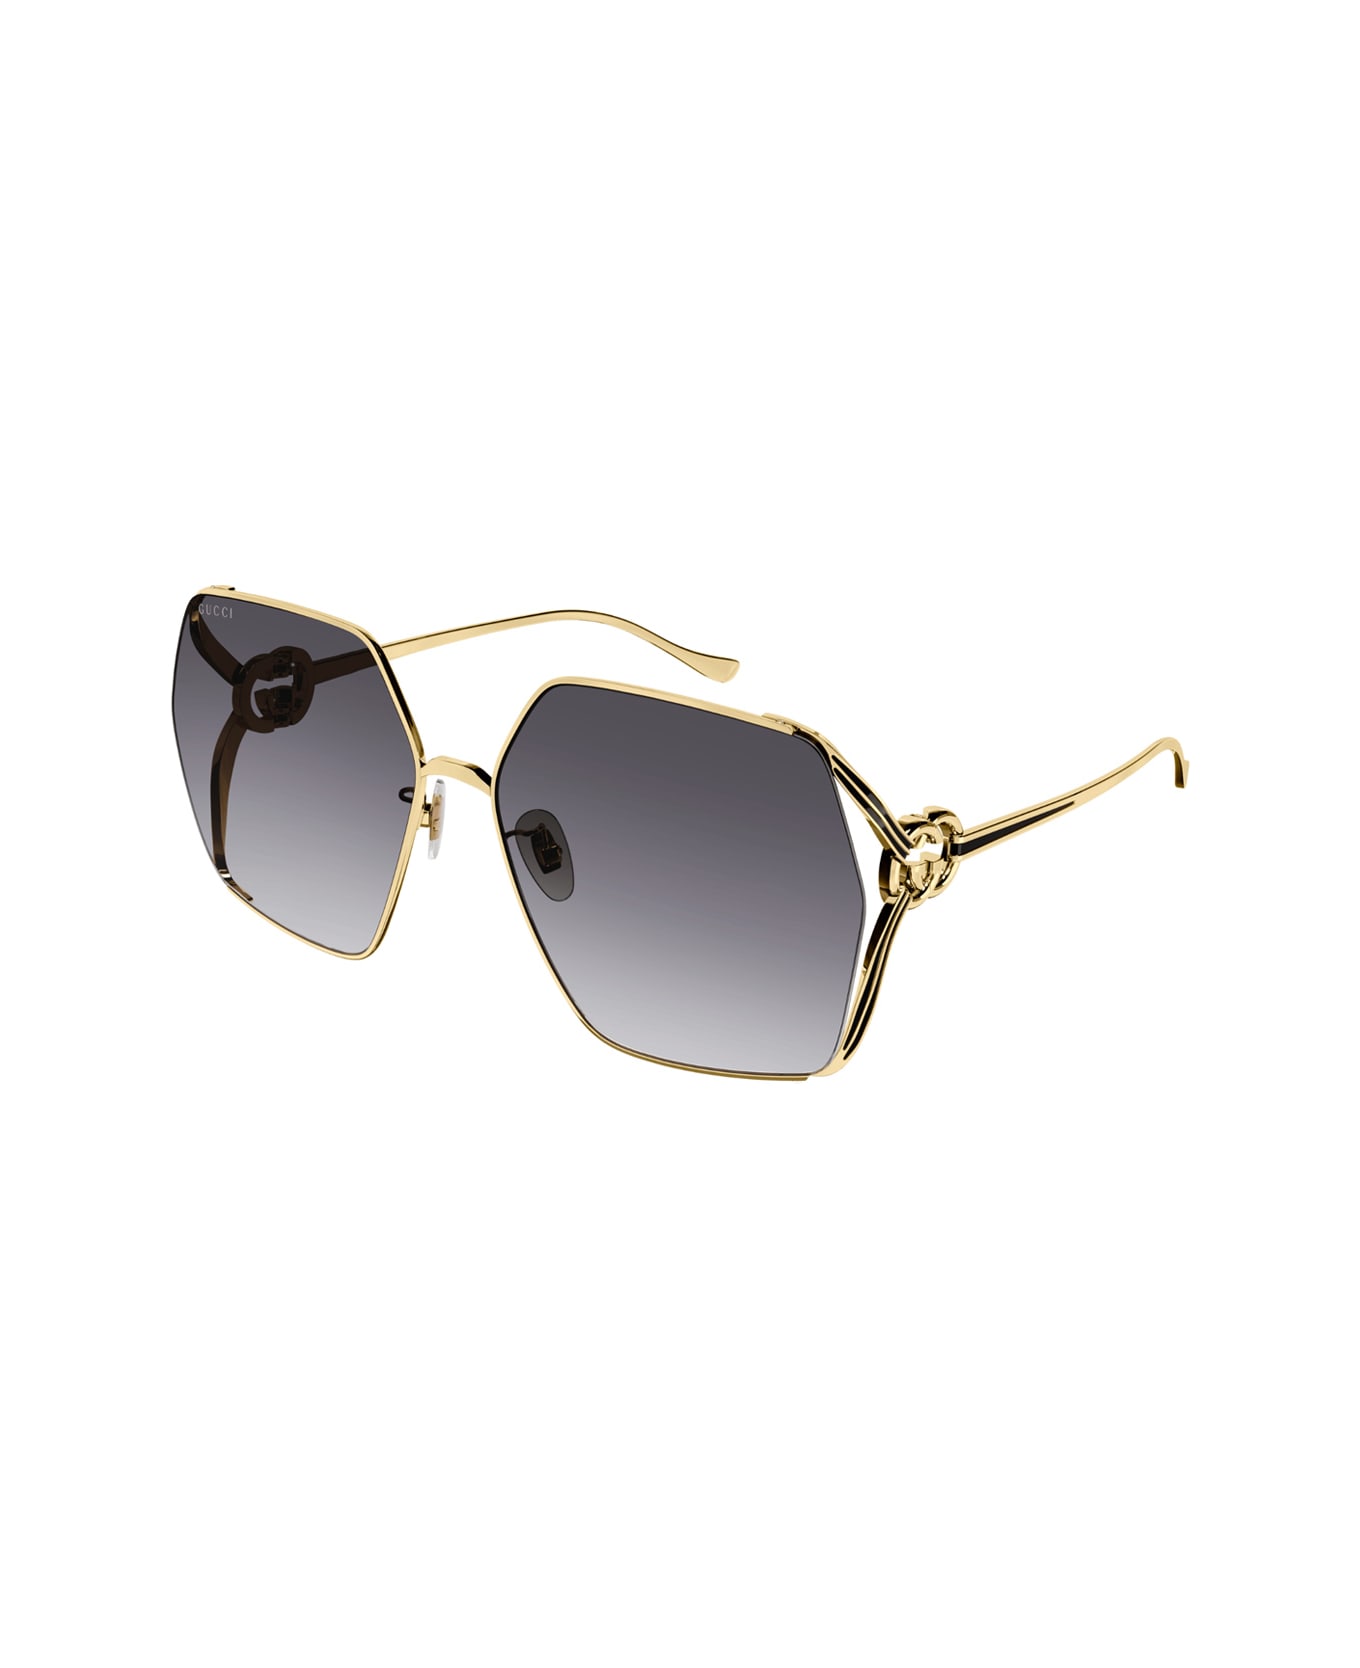 Gucci Eyewear Gg1322sa 001 Sunglasses Sunglasses - 001 GOLD GOLD GREY